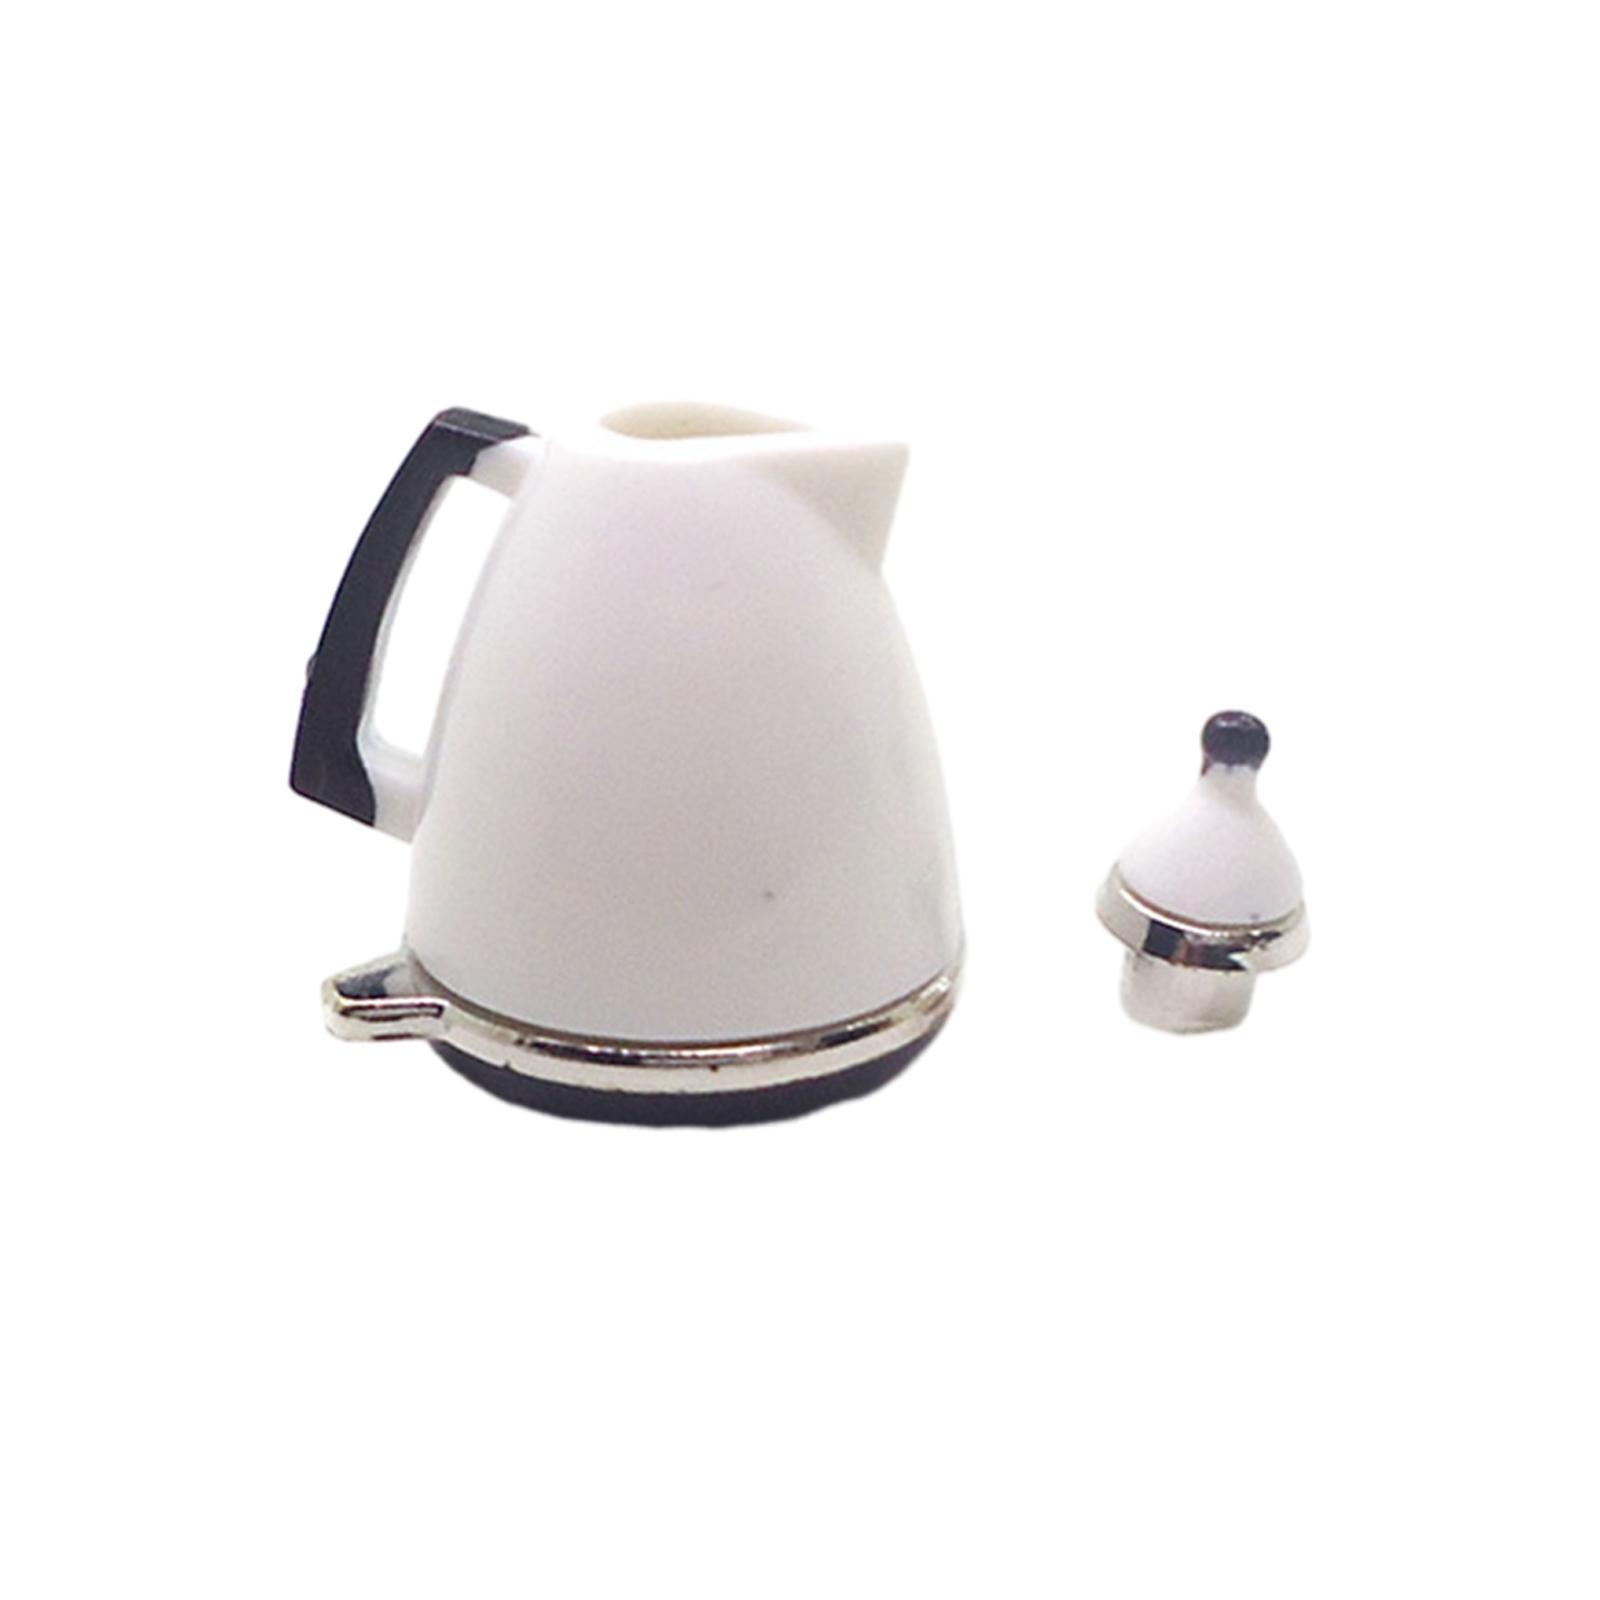 Dollhouse Miniature Kettle Mini Teapot Model for House Model Micro Landscape